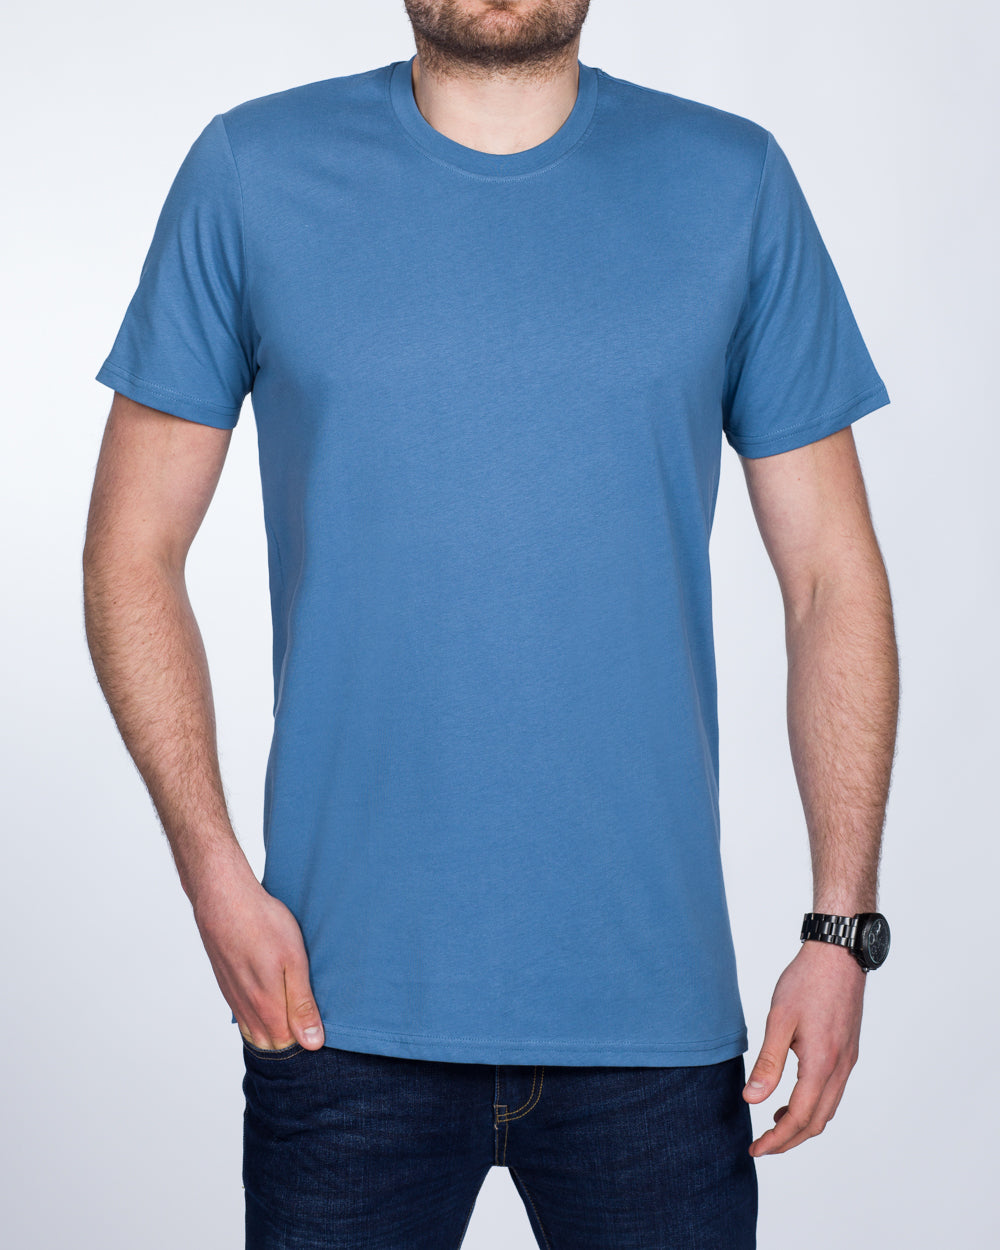 Girav Sydney Extra Tall T-Shirt (jeans blue)